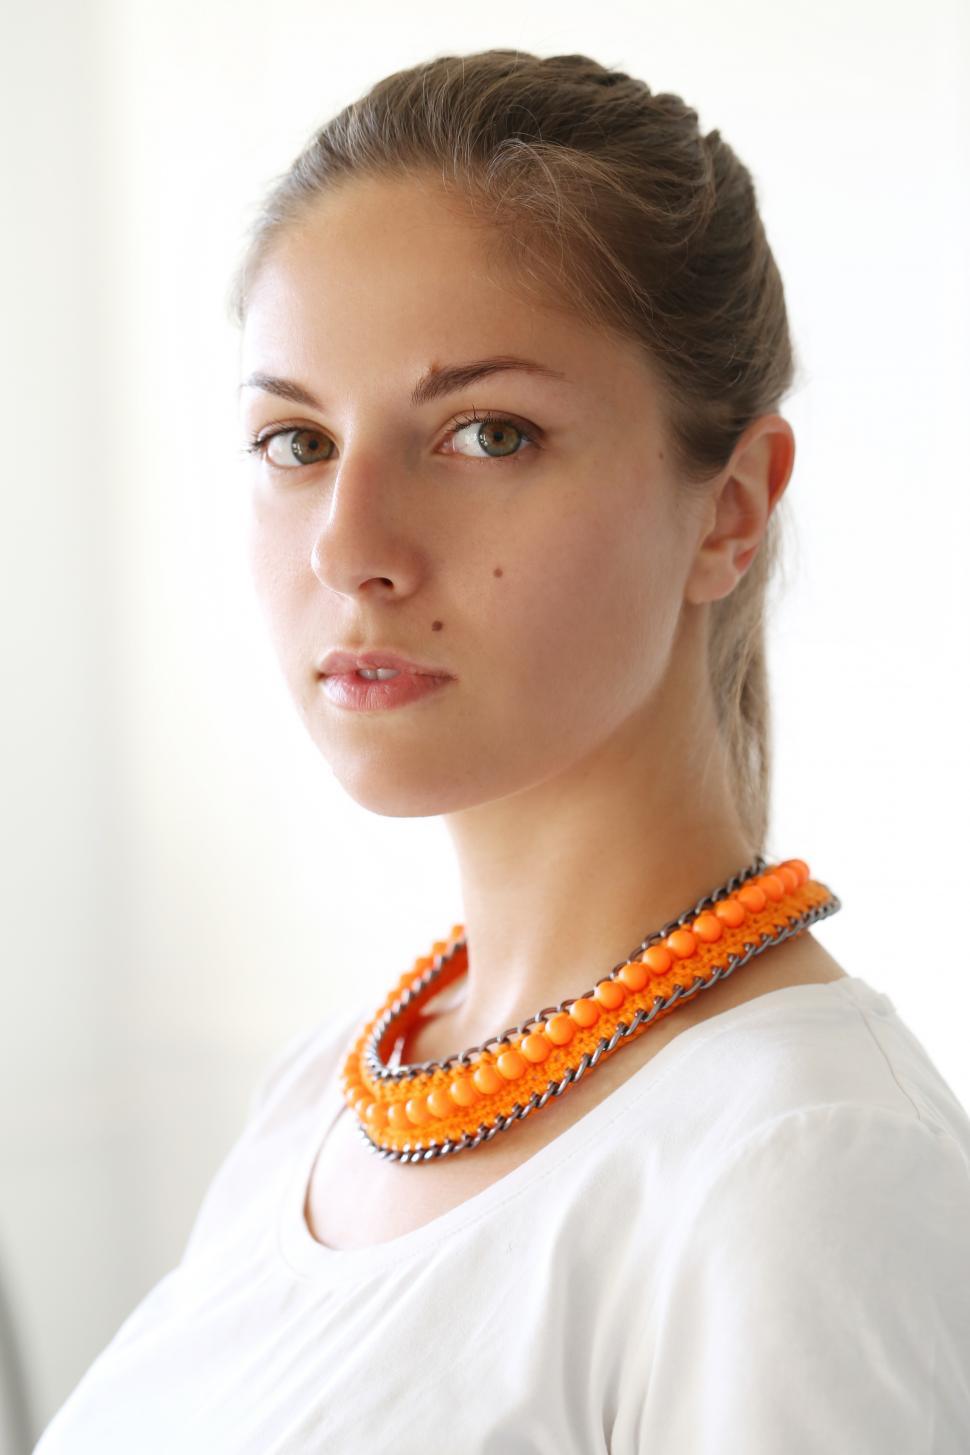 Free Image of Girl with wearing orange necklace 